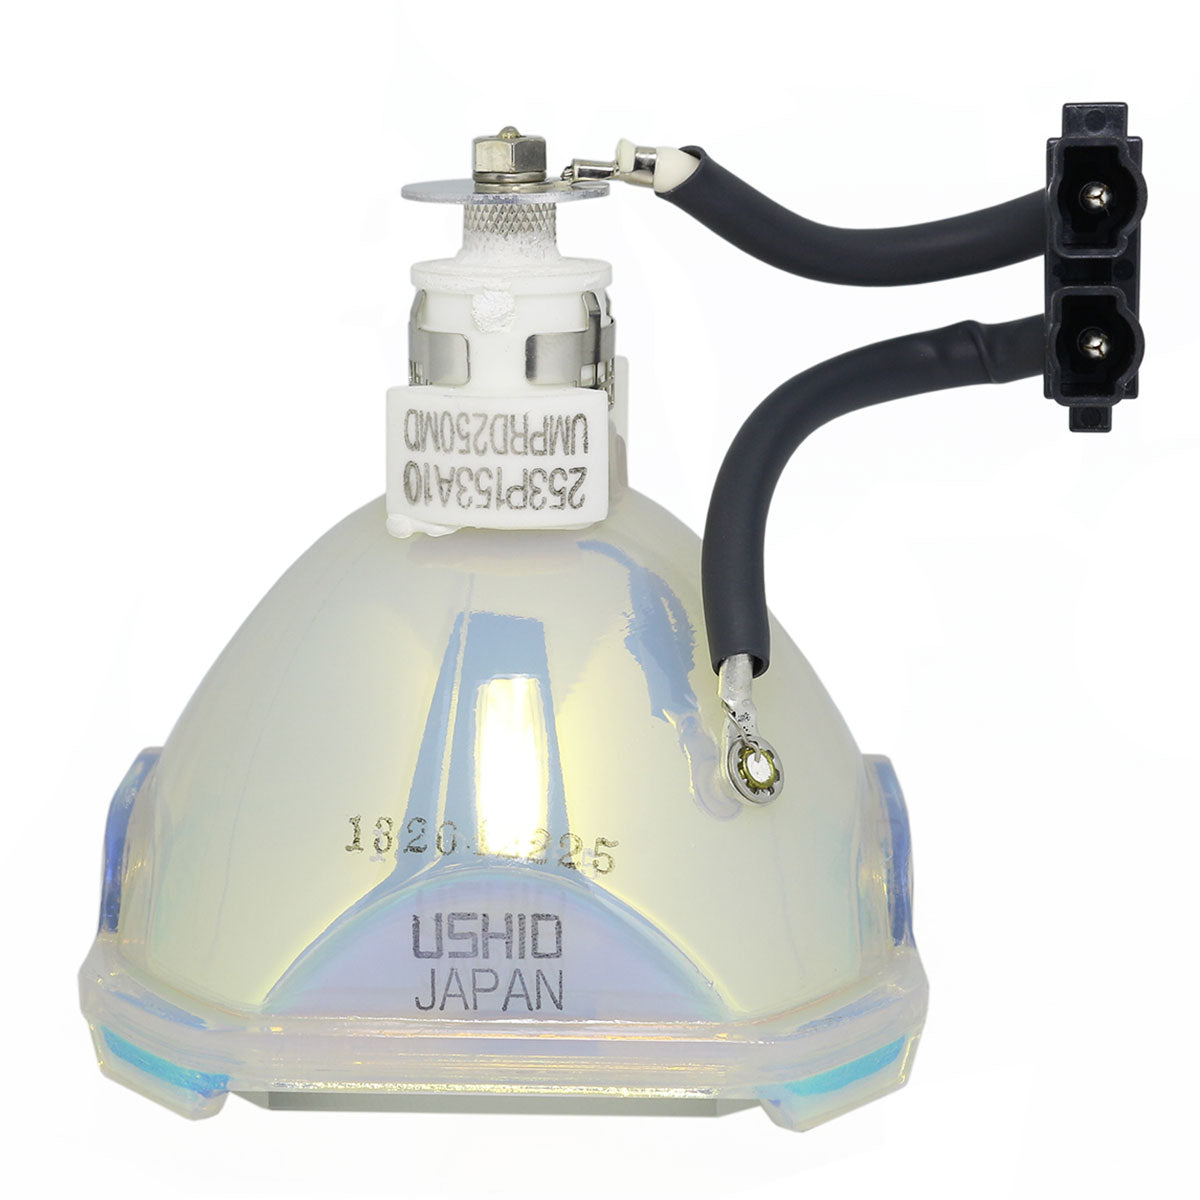 NEC GT60LPS Ushio Projector Bare Lamp